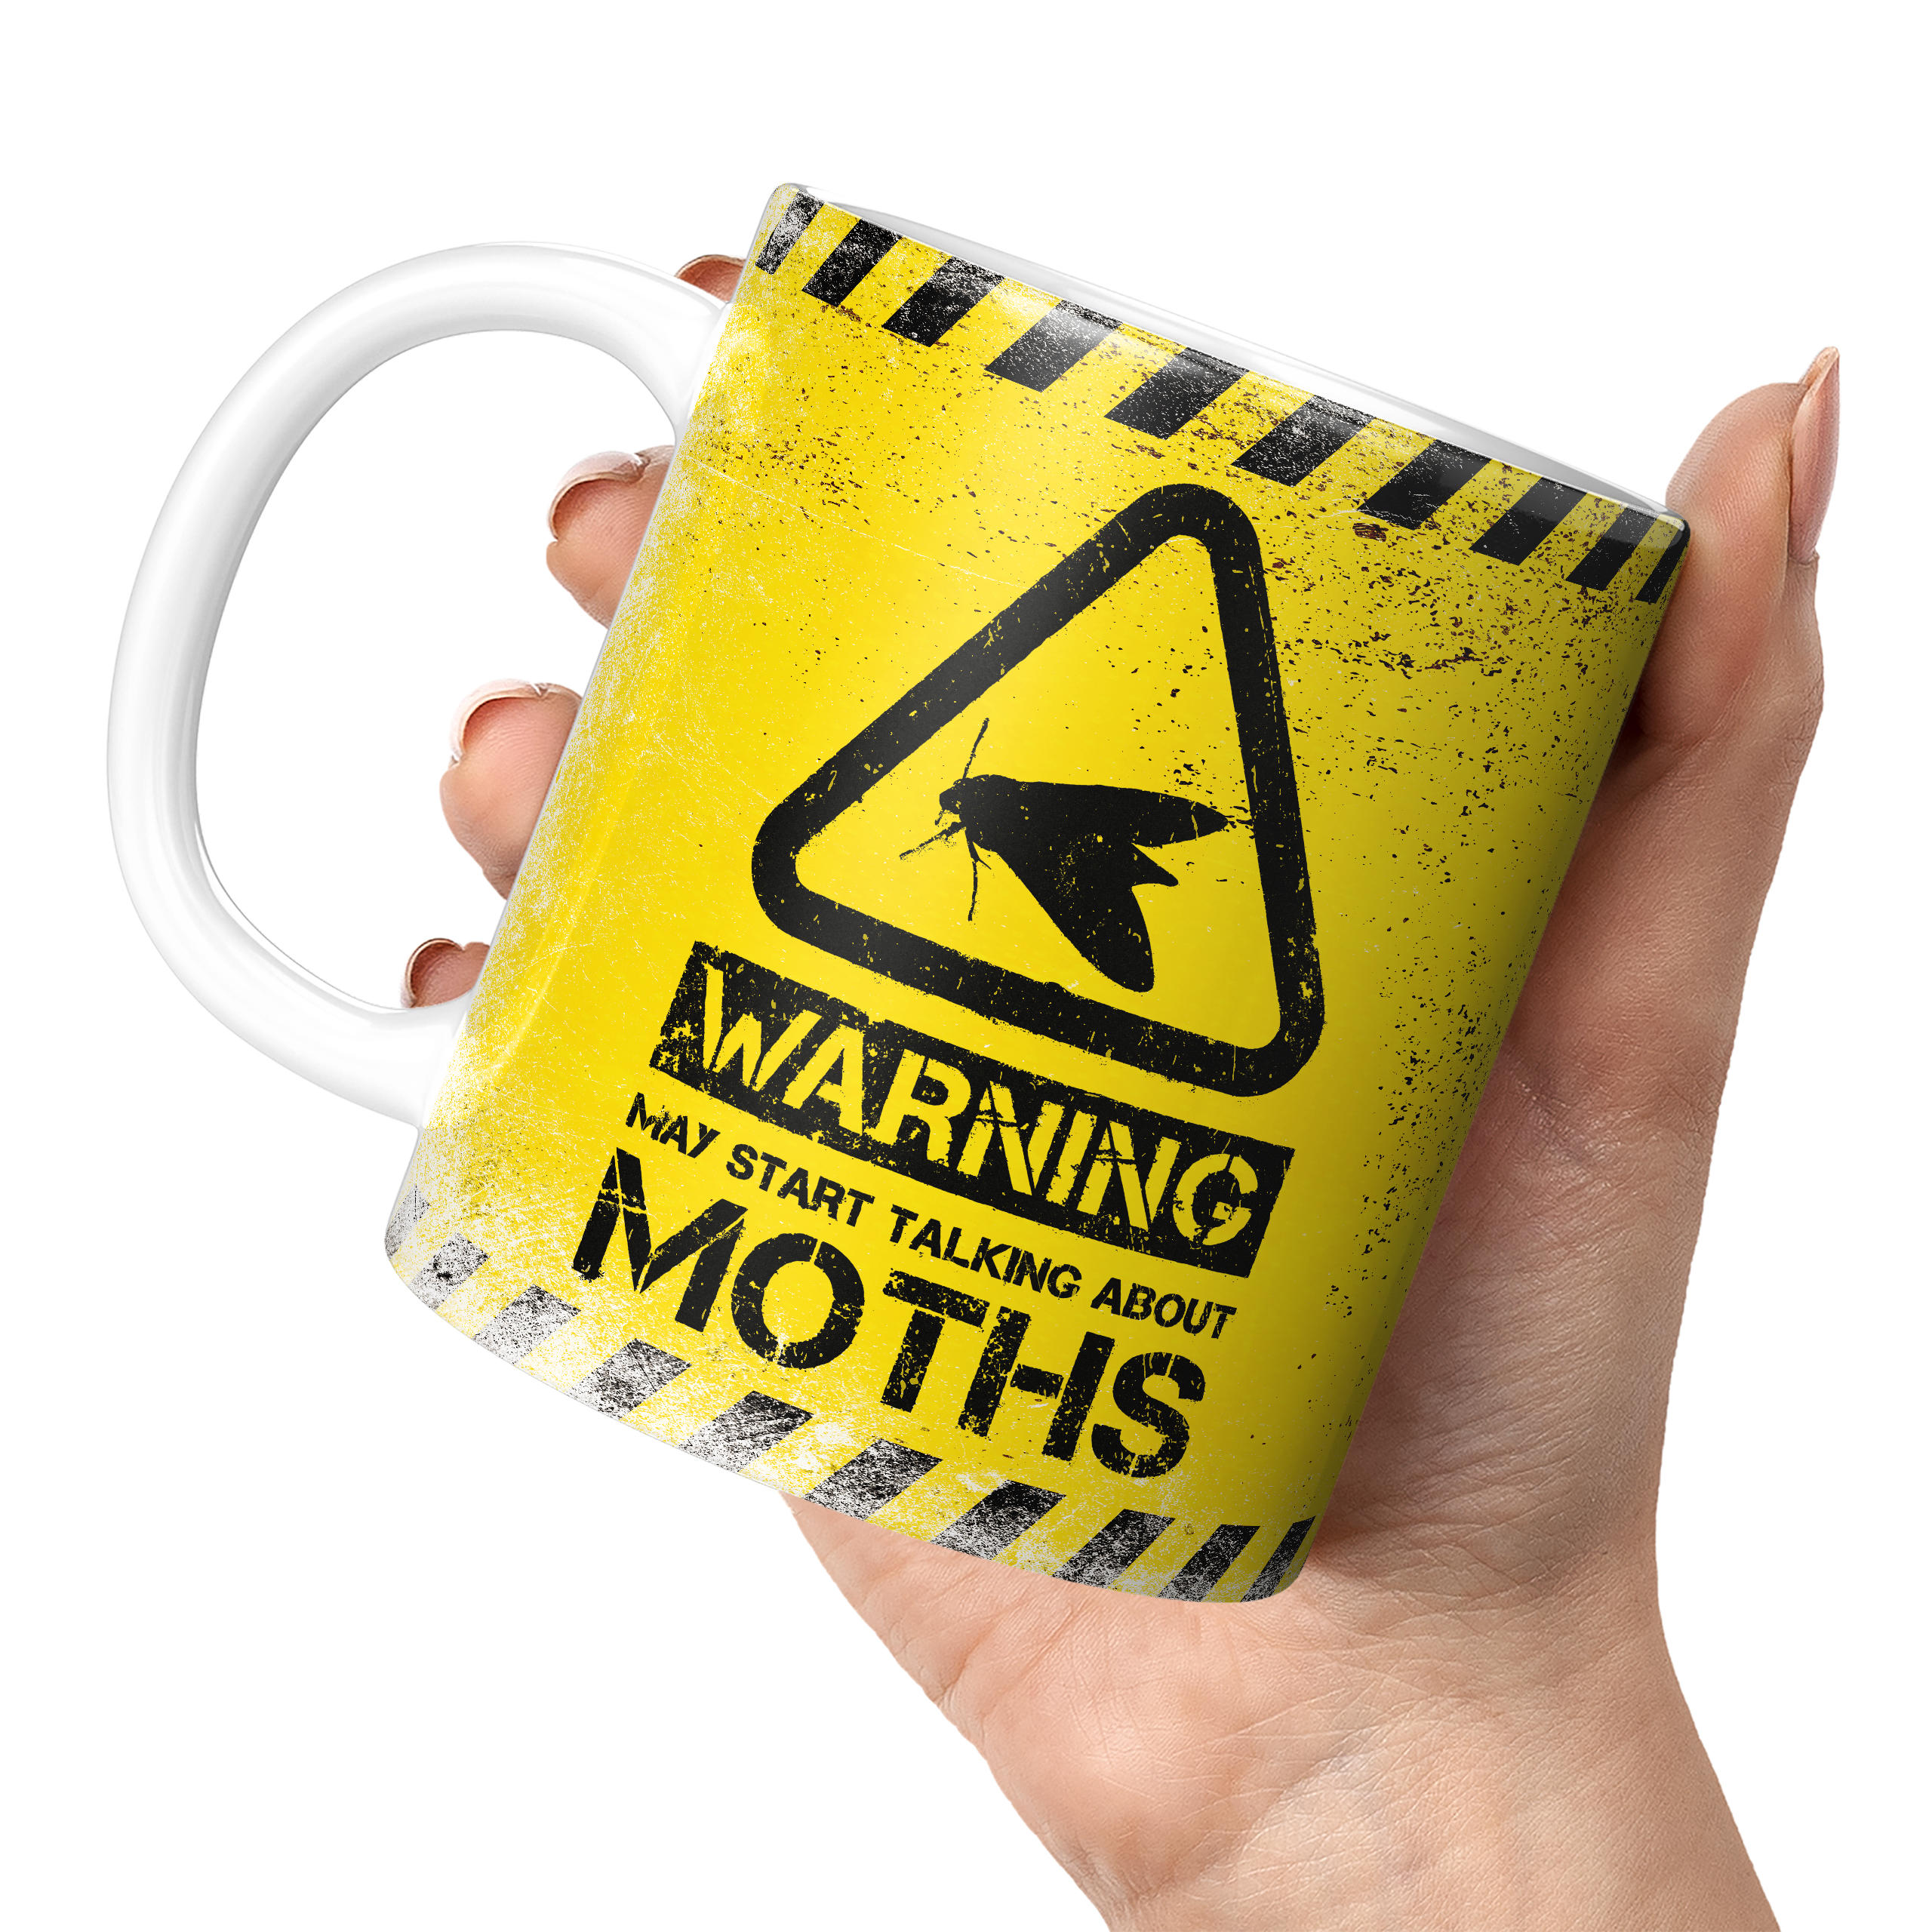 WARNING MAY START TALKING ABOUT MOTHS 11oz NOVELTY MUG Mugs